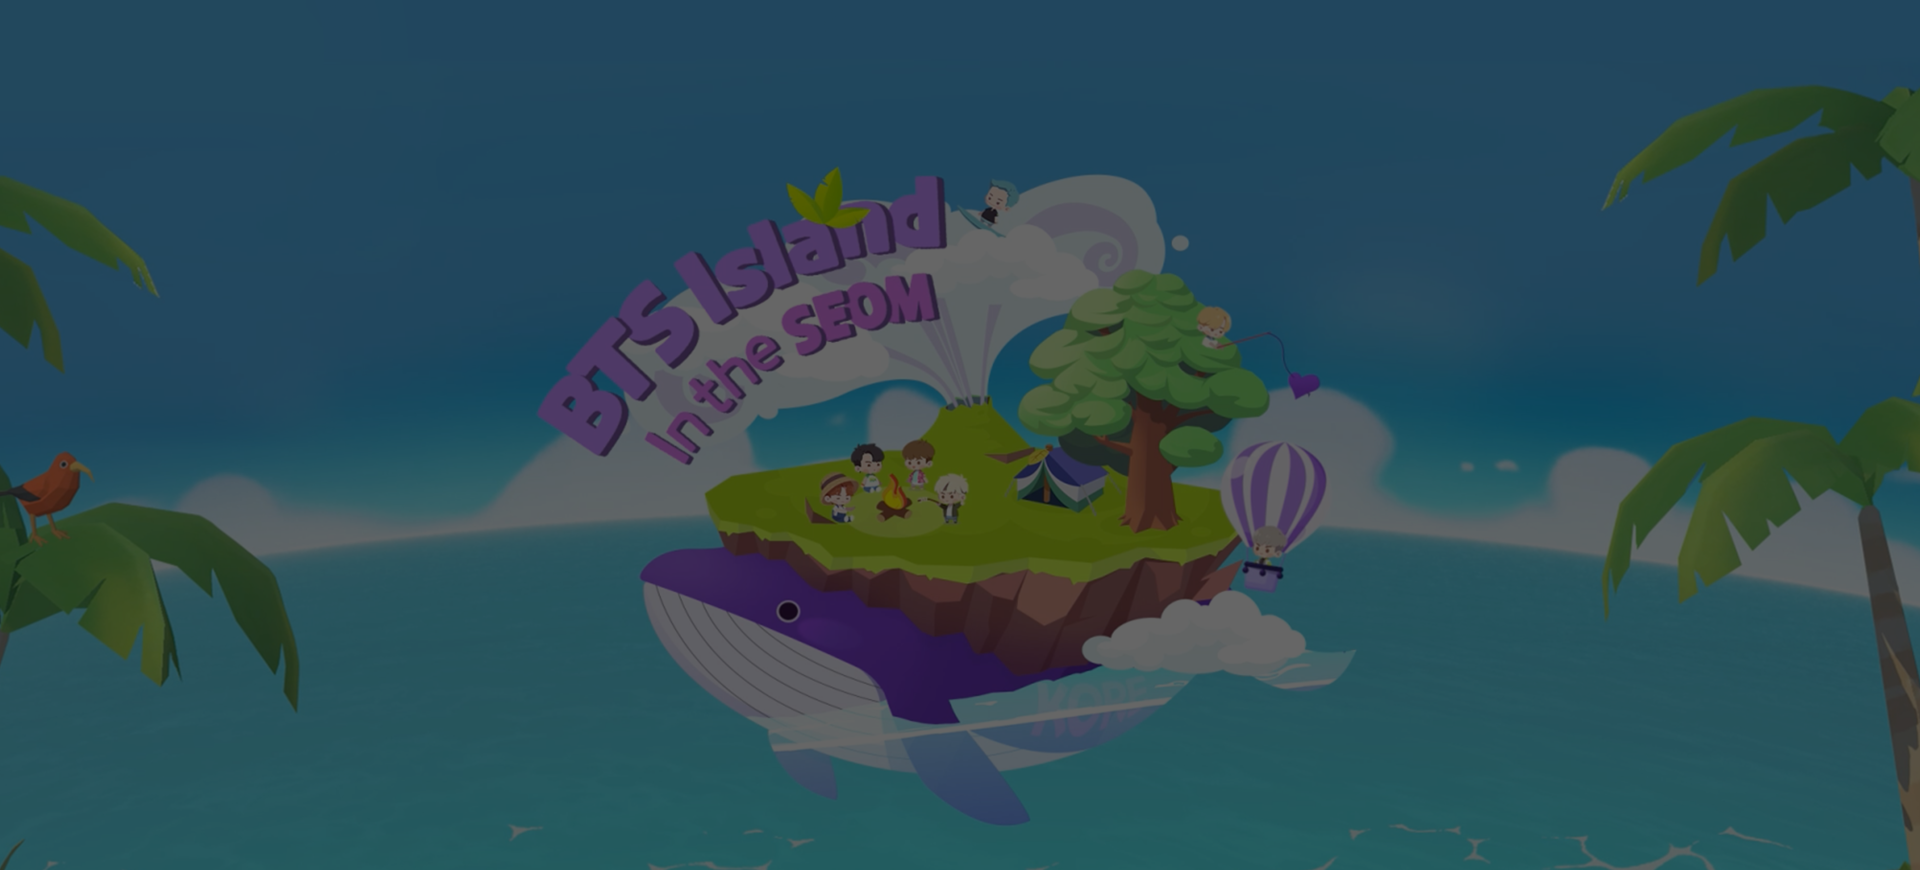 Bts Island: In The Seom